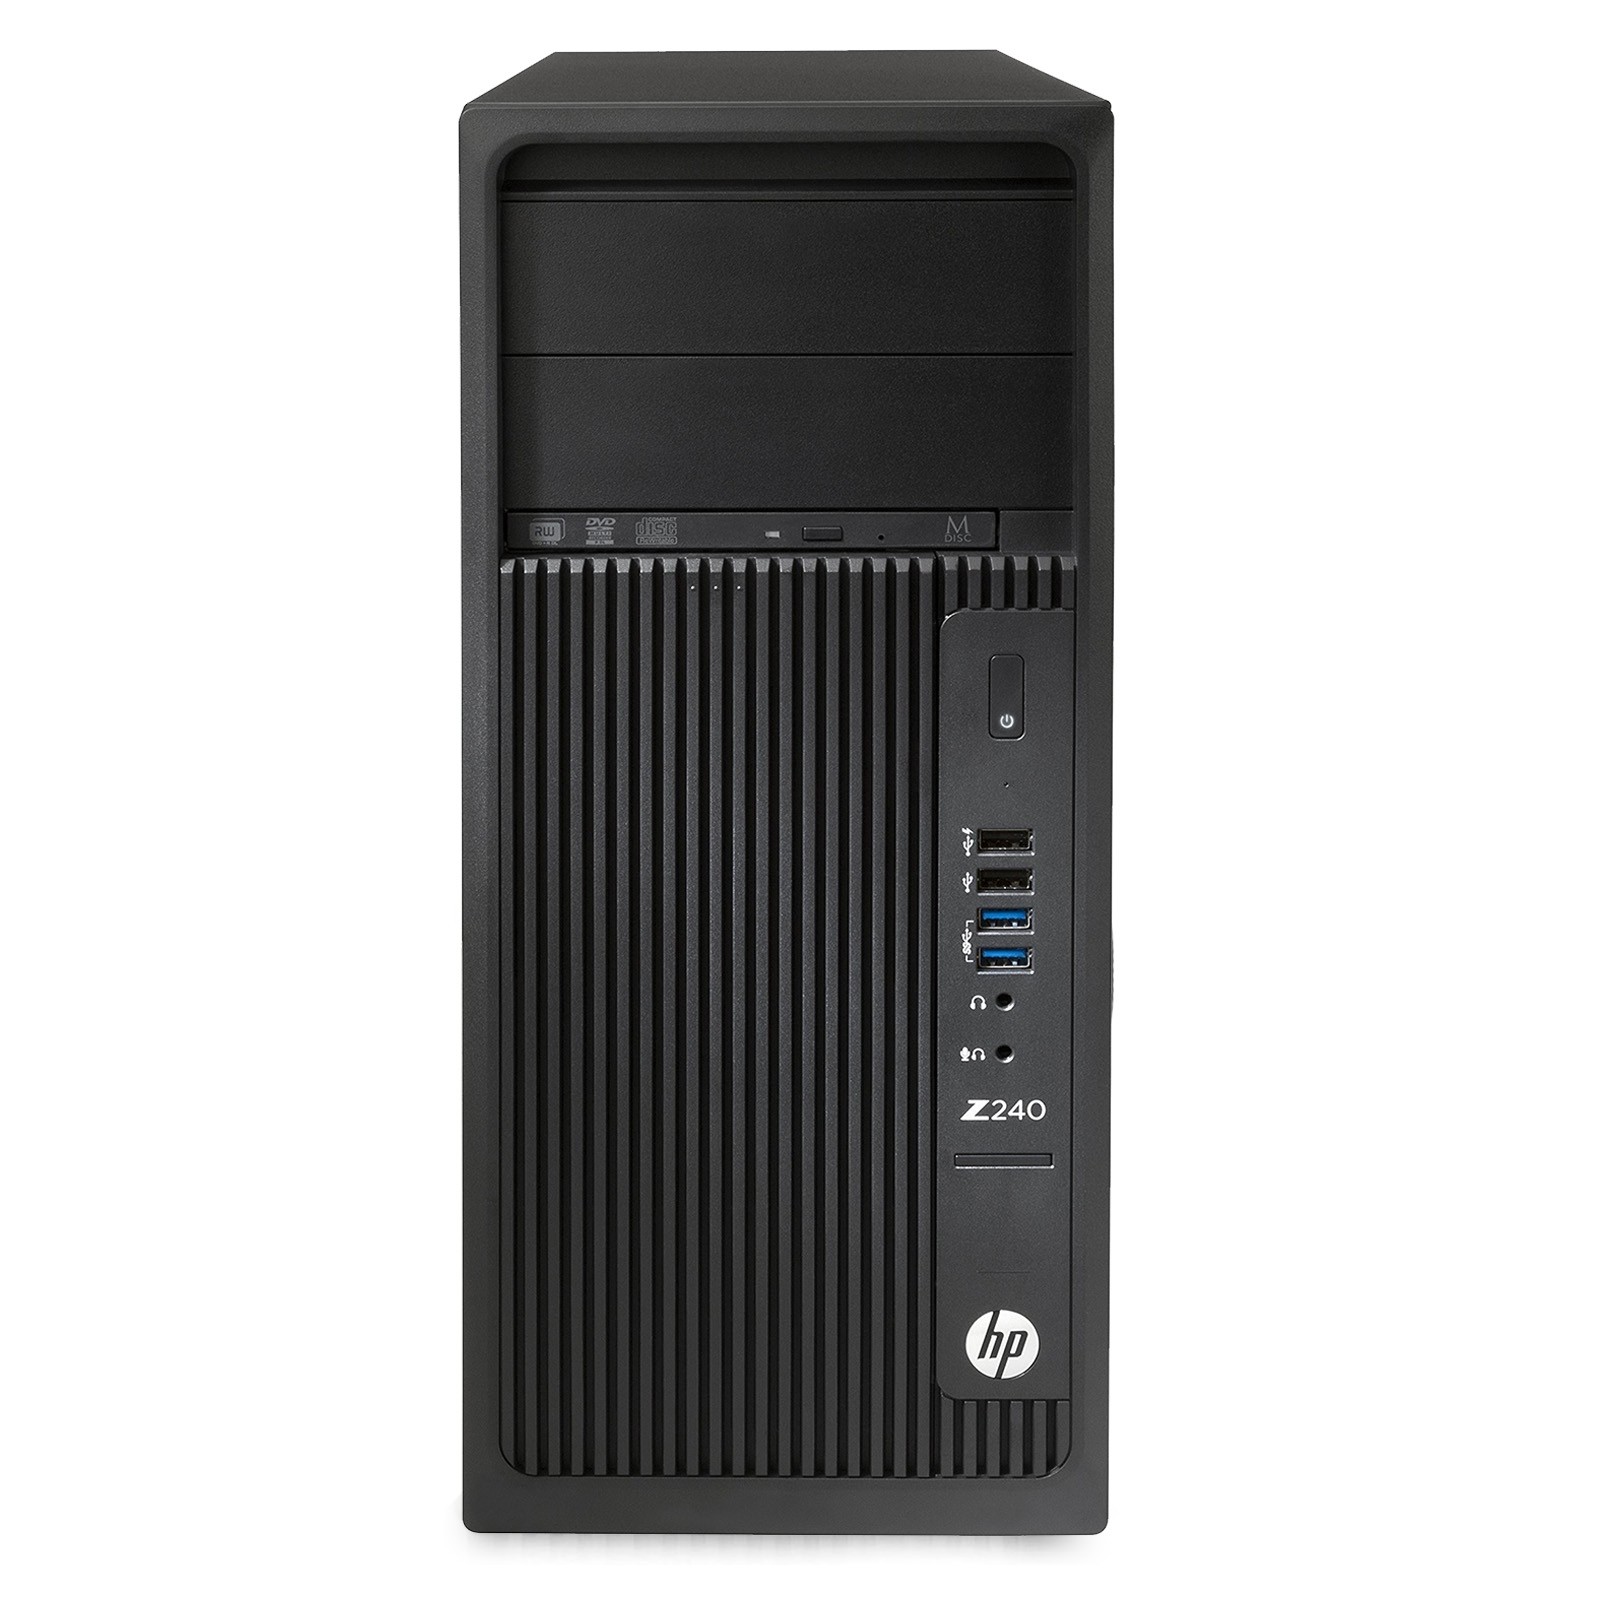 HP Z240 i Series Workstation - Front